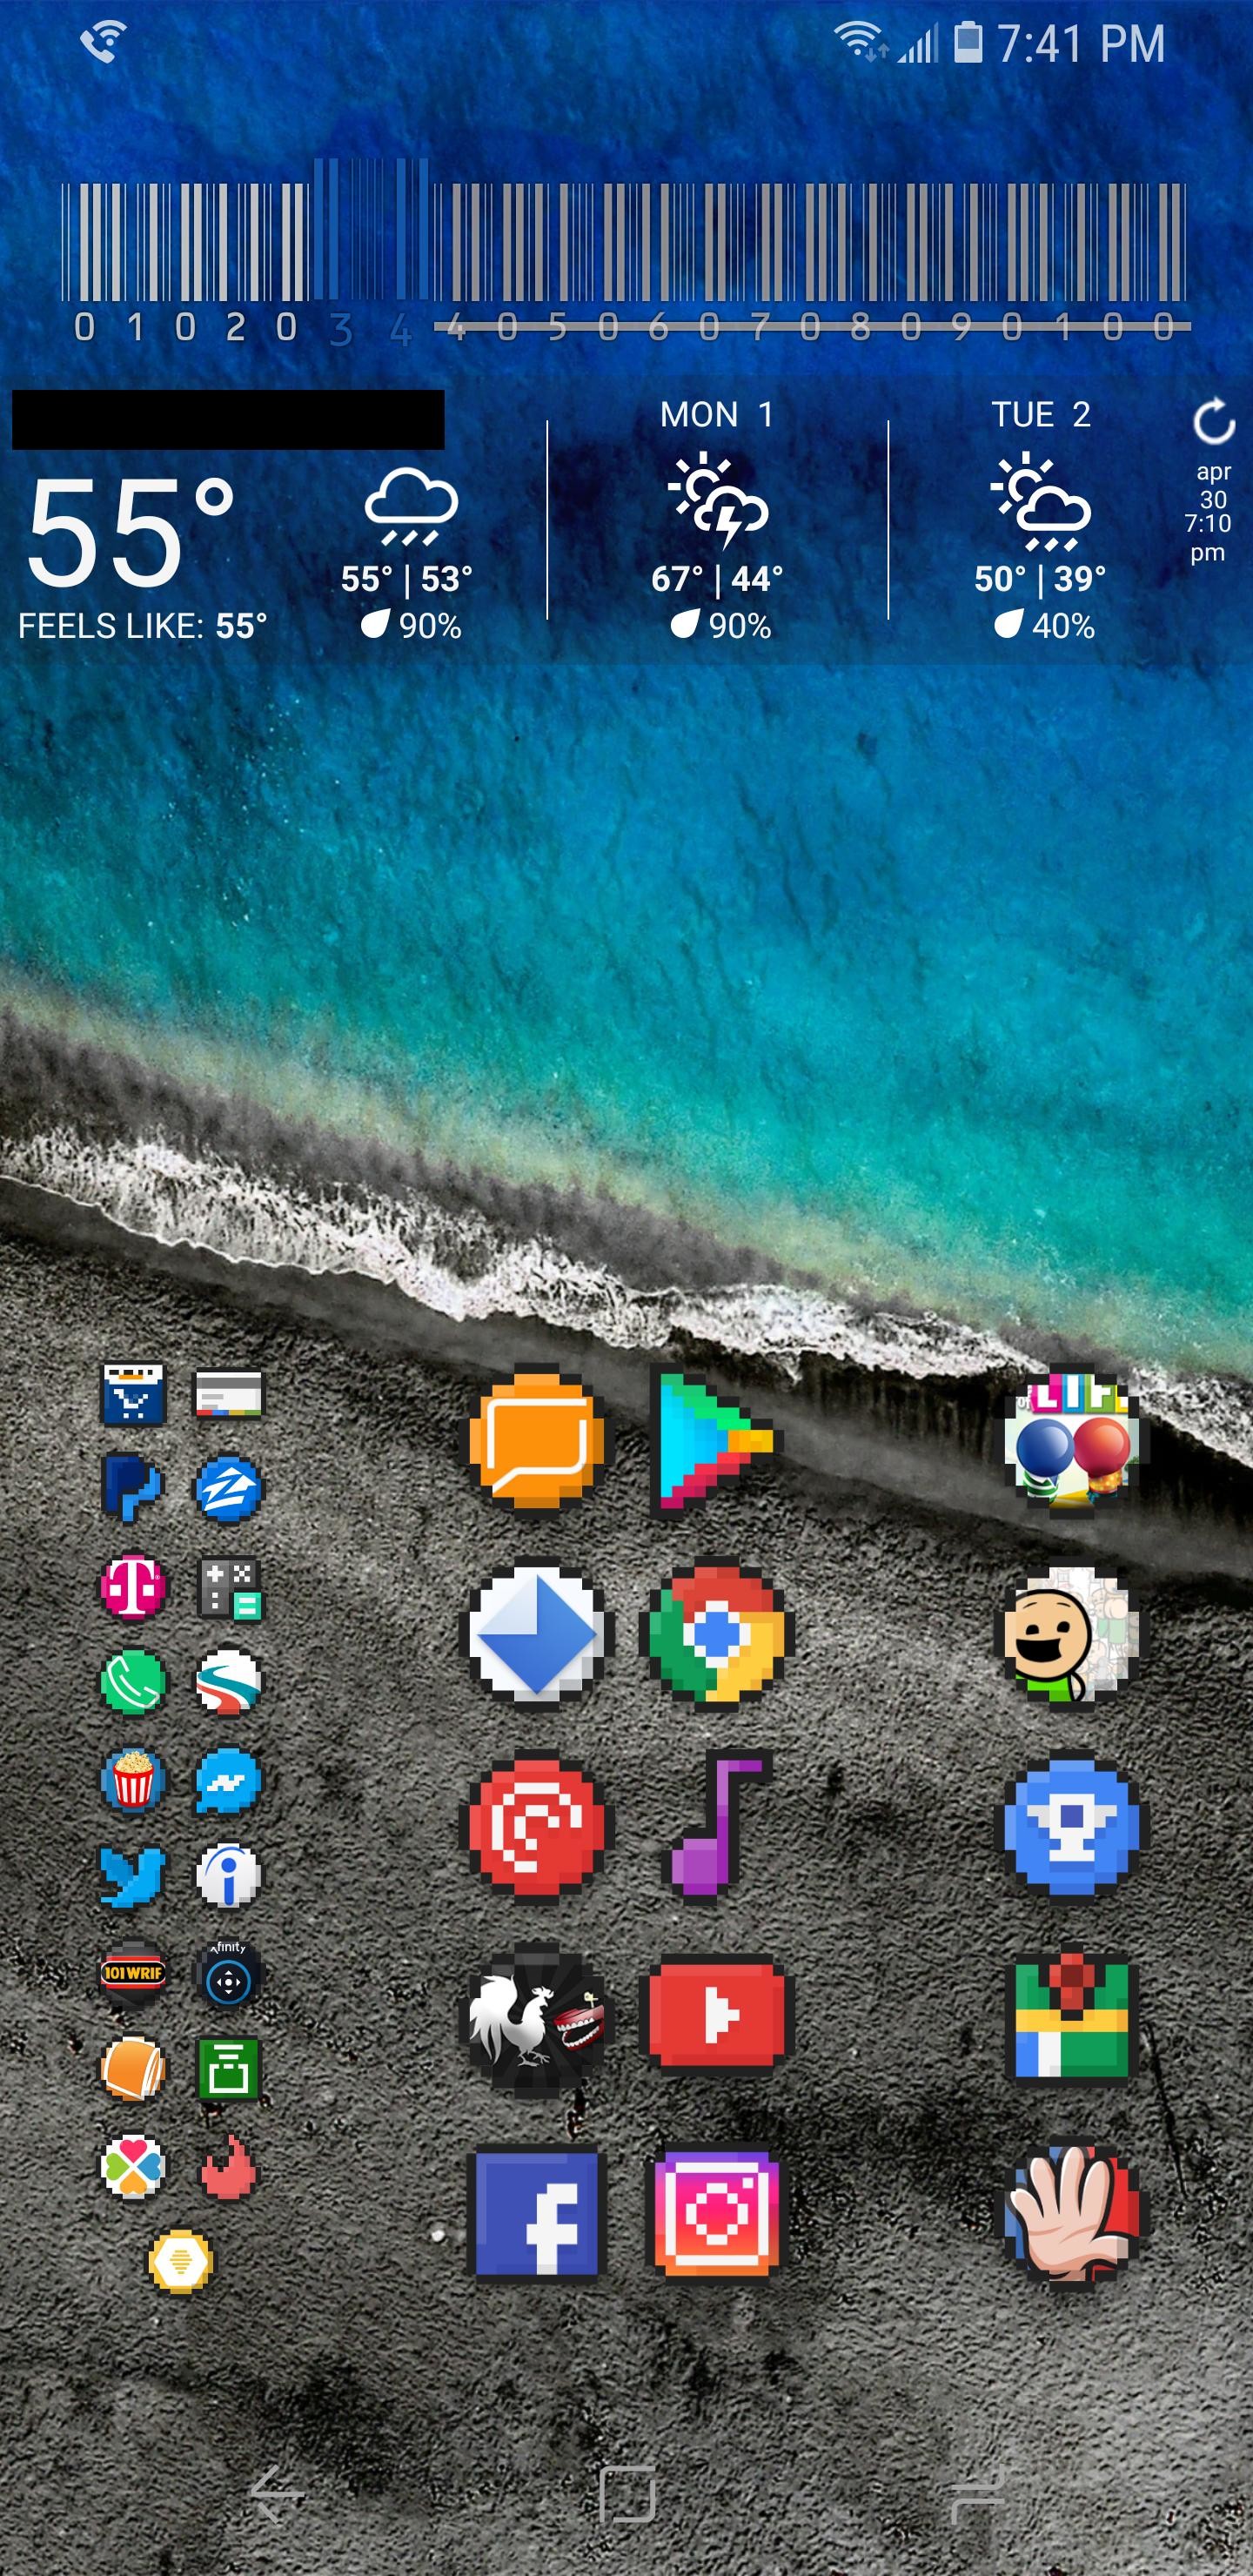 1440x2960 Nova, PixBit icons, PixelizeD theme/Wallpaper, Weather Underground and  Minimalistic Text widgets